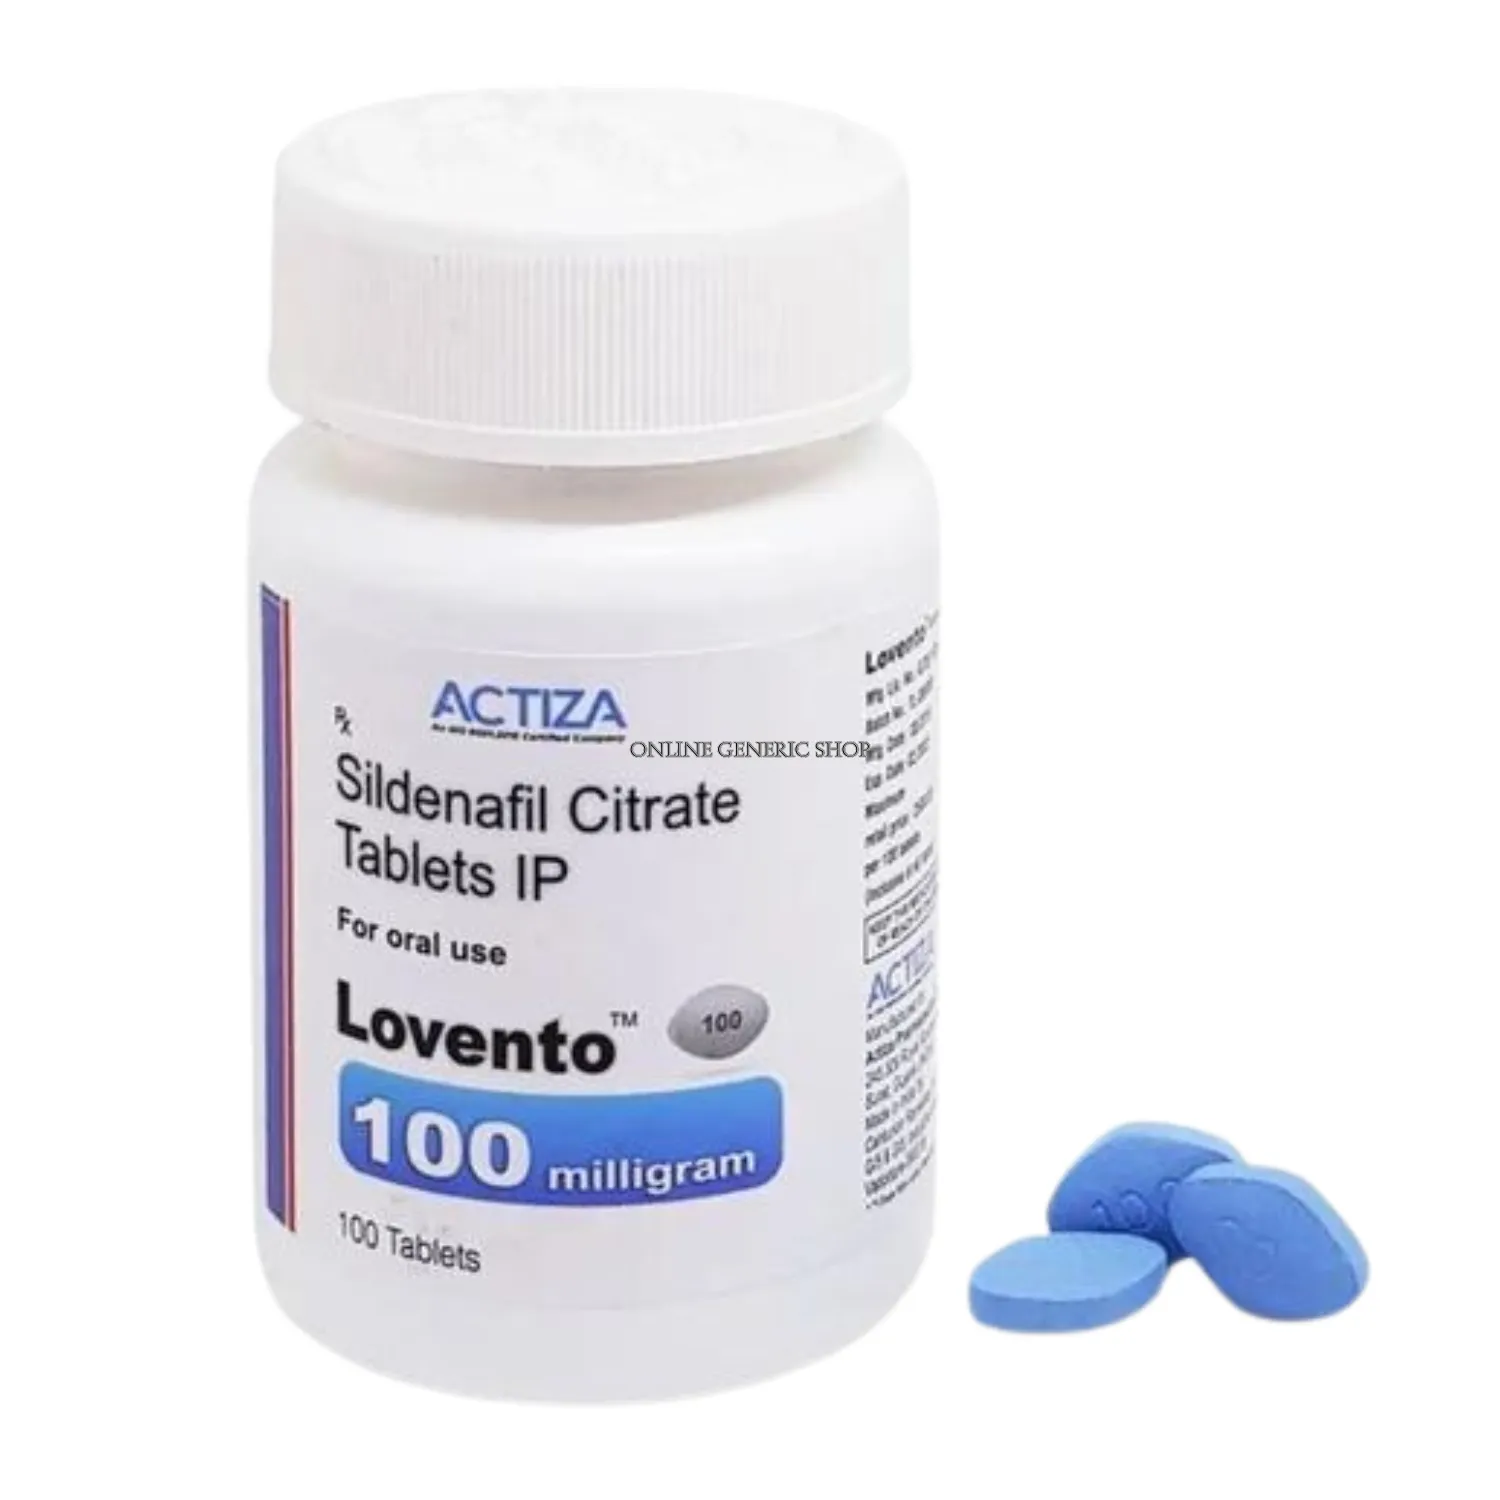 Lovento 100 mg Image